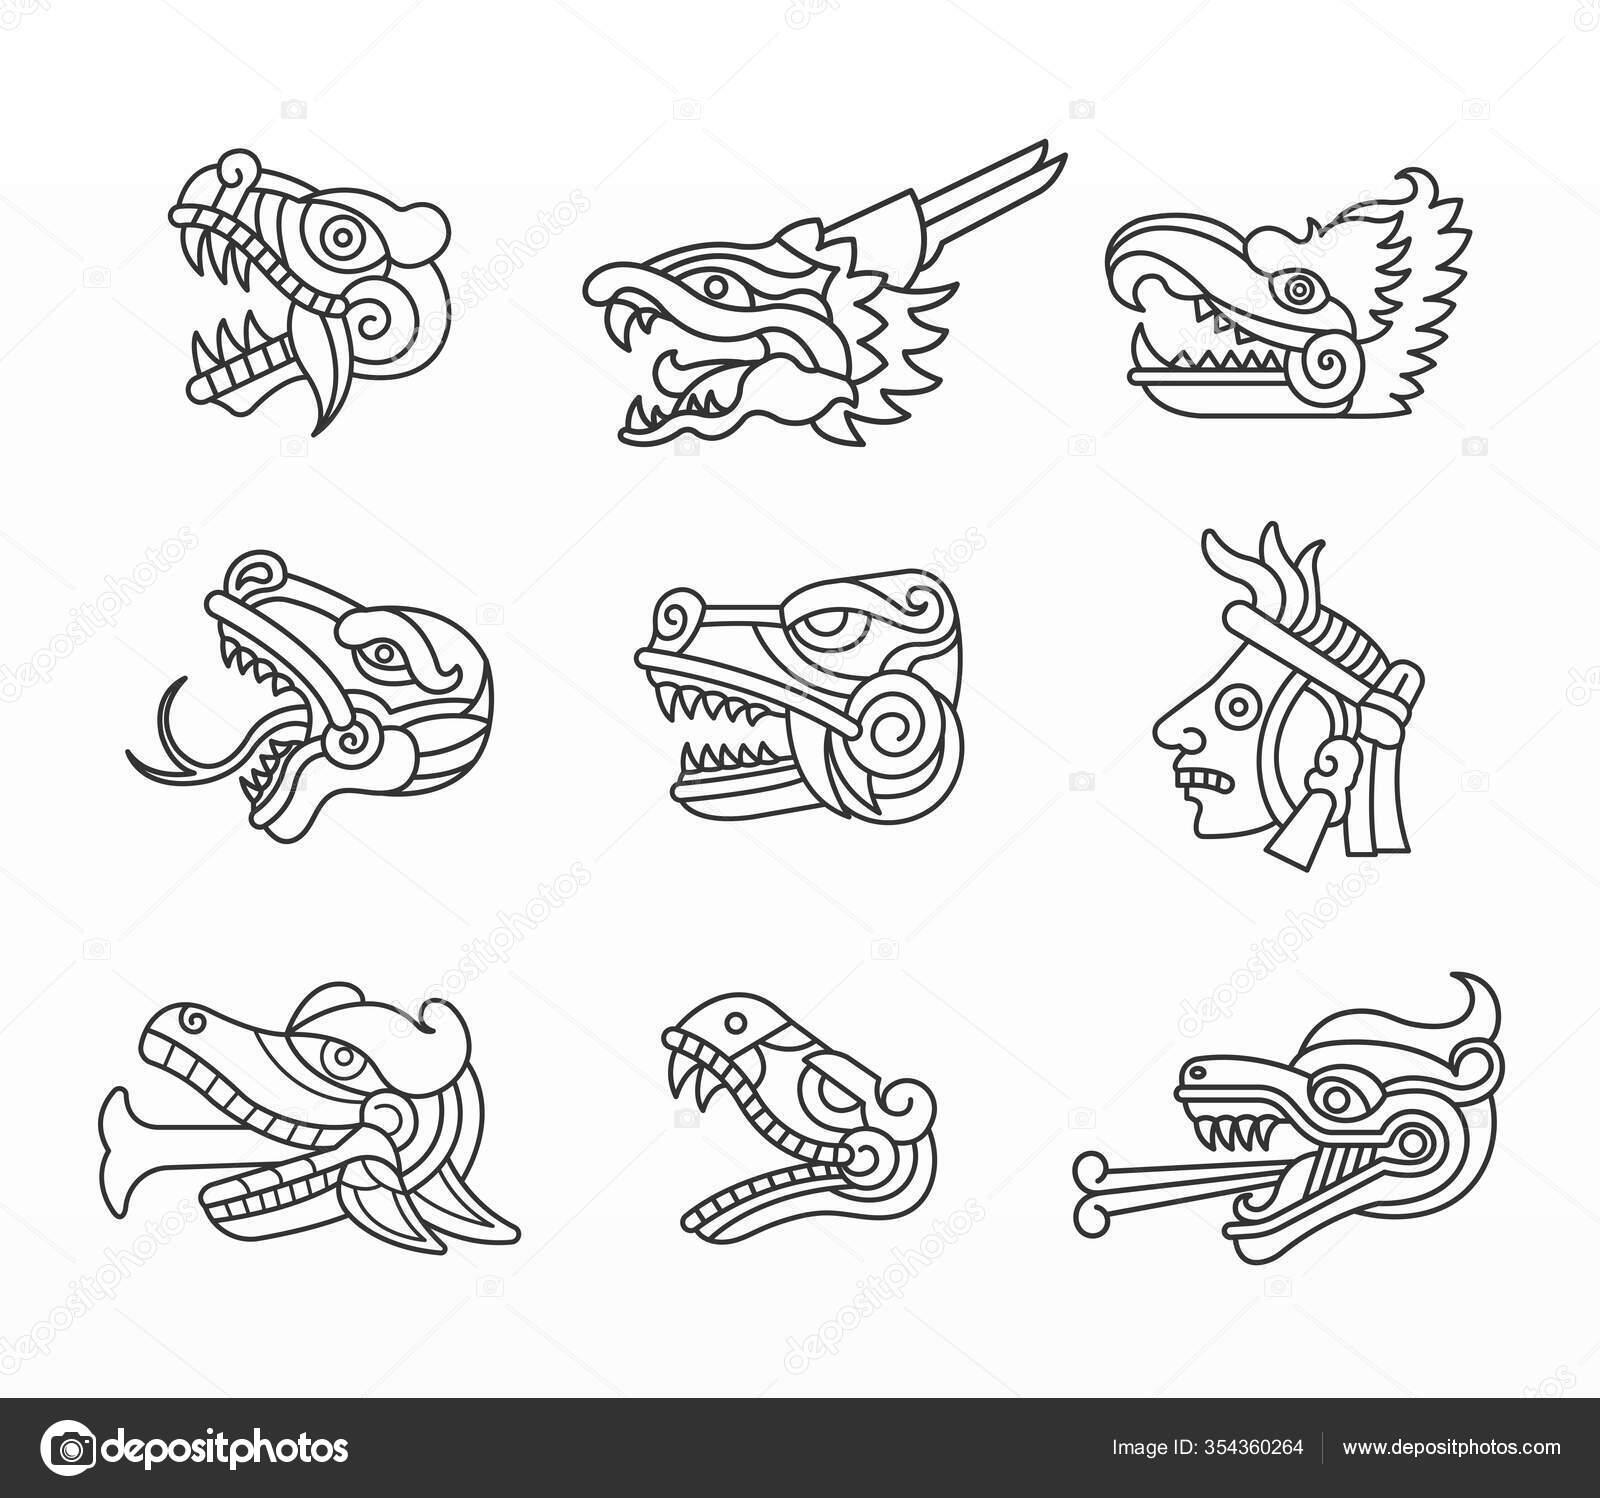 Dios azteca quetzalcoatl imágenes de stock de arte vectorial | Depositphotos